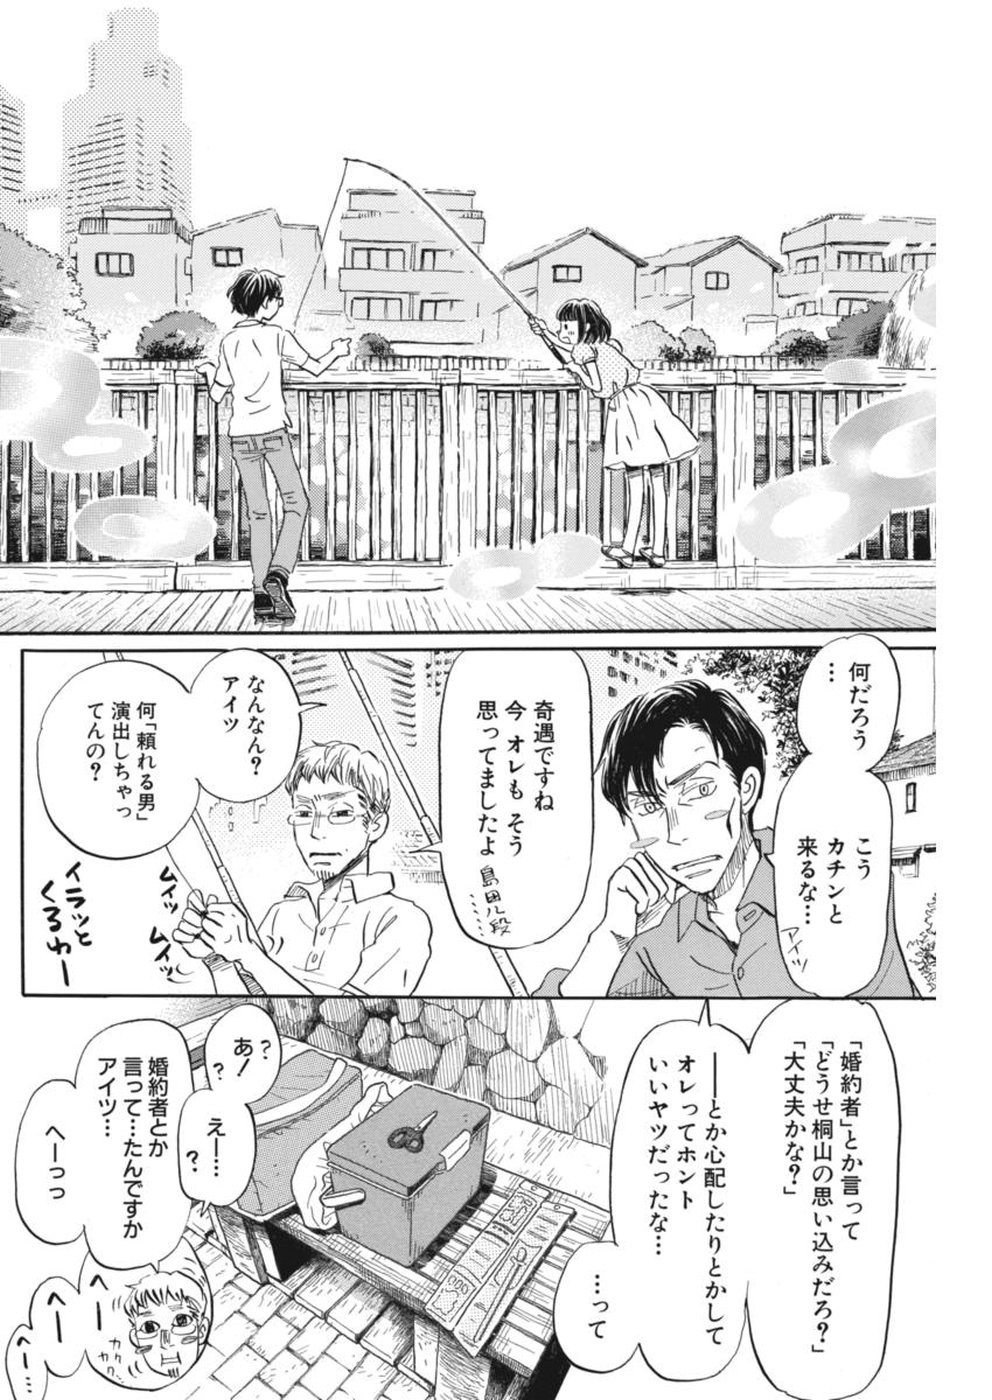 3 Gatsu no Lion - Chapter 144 - Page 8